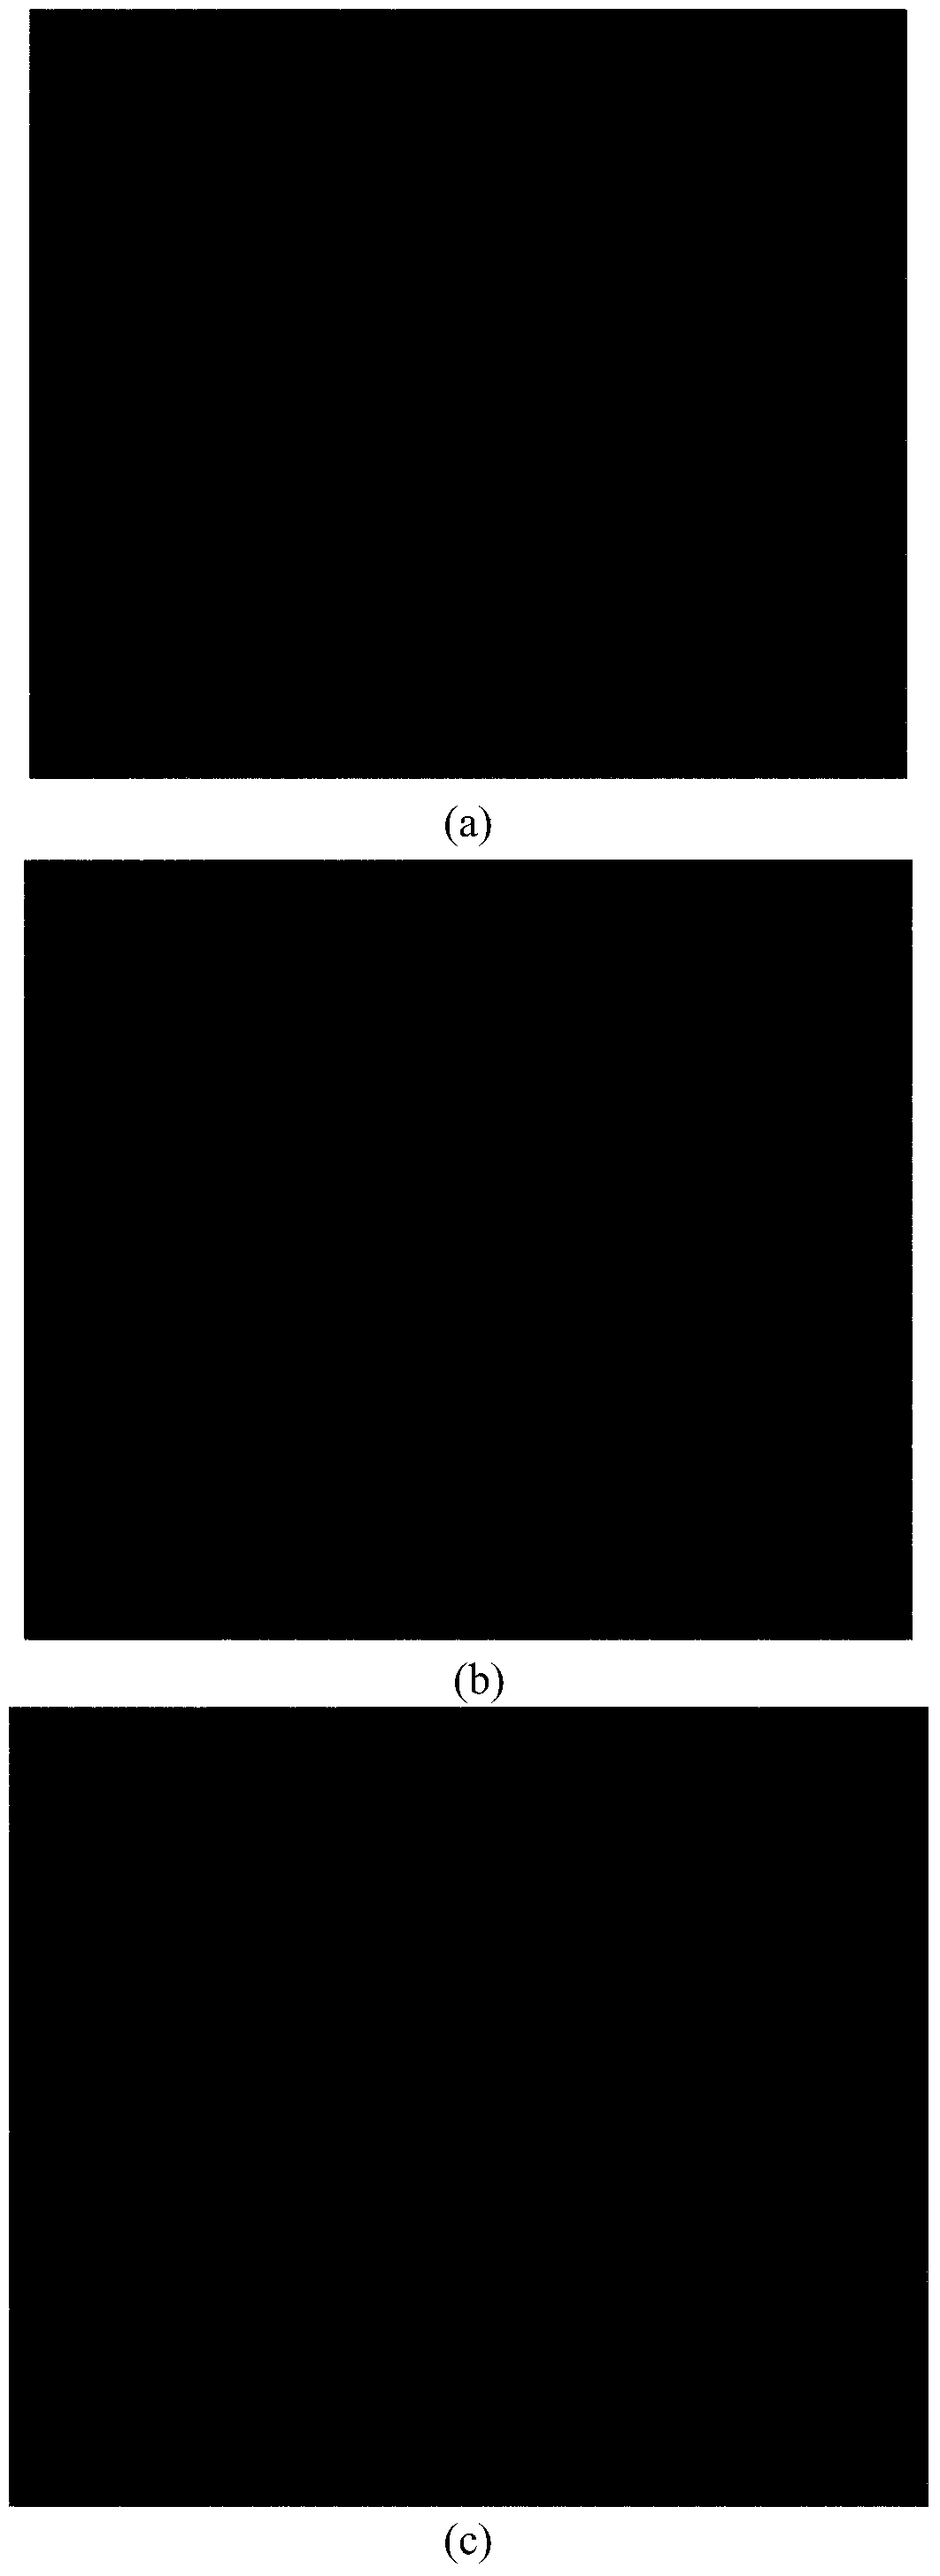 K-SVD and sparse representation based polarization SAR (synthetic aperture radar) image classification method